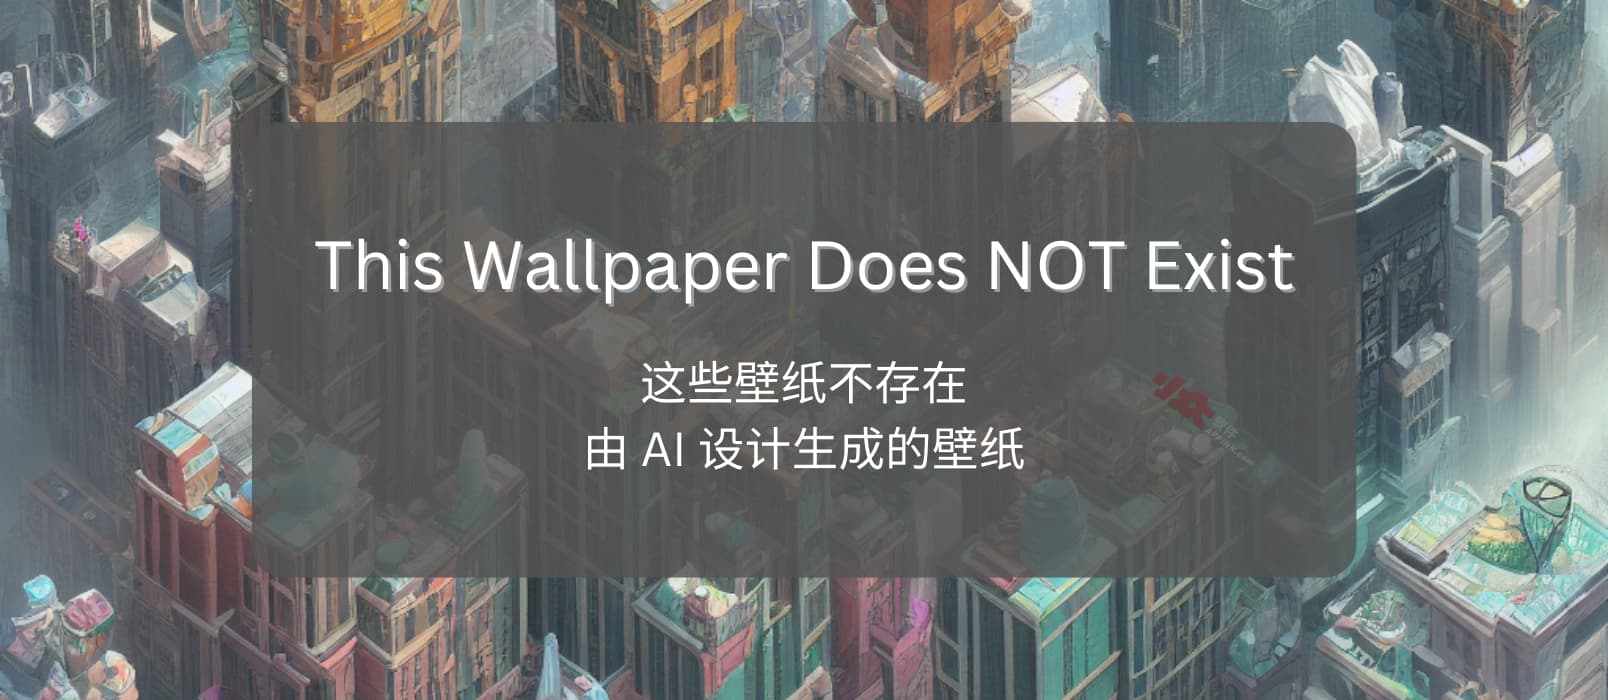 This Wallpaper Does NOT Exist - 这些壁纸不存在。由 AI 设计生成的壁纸